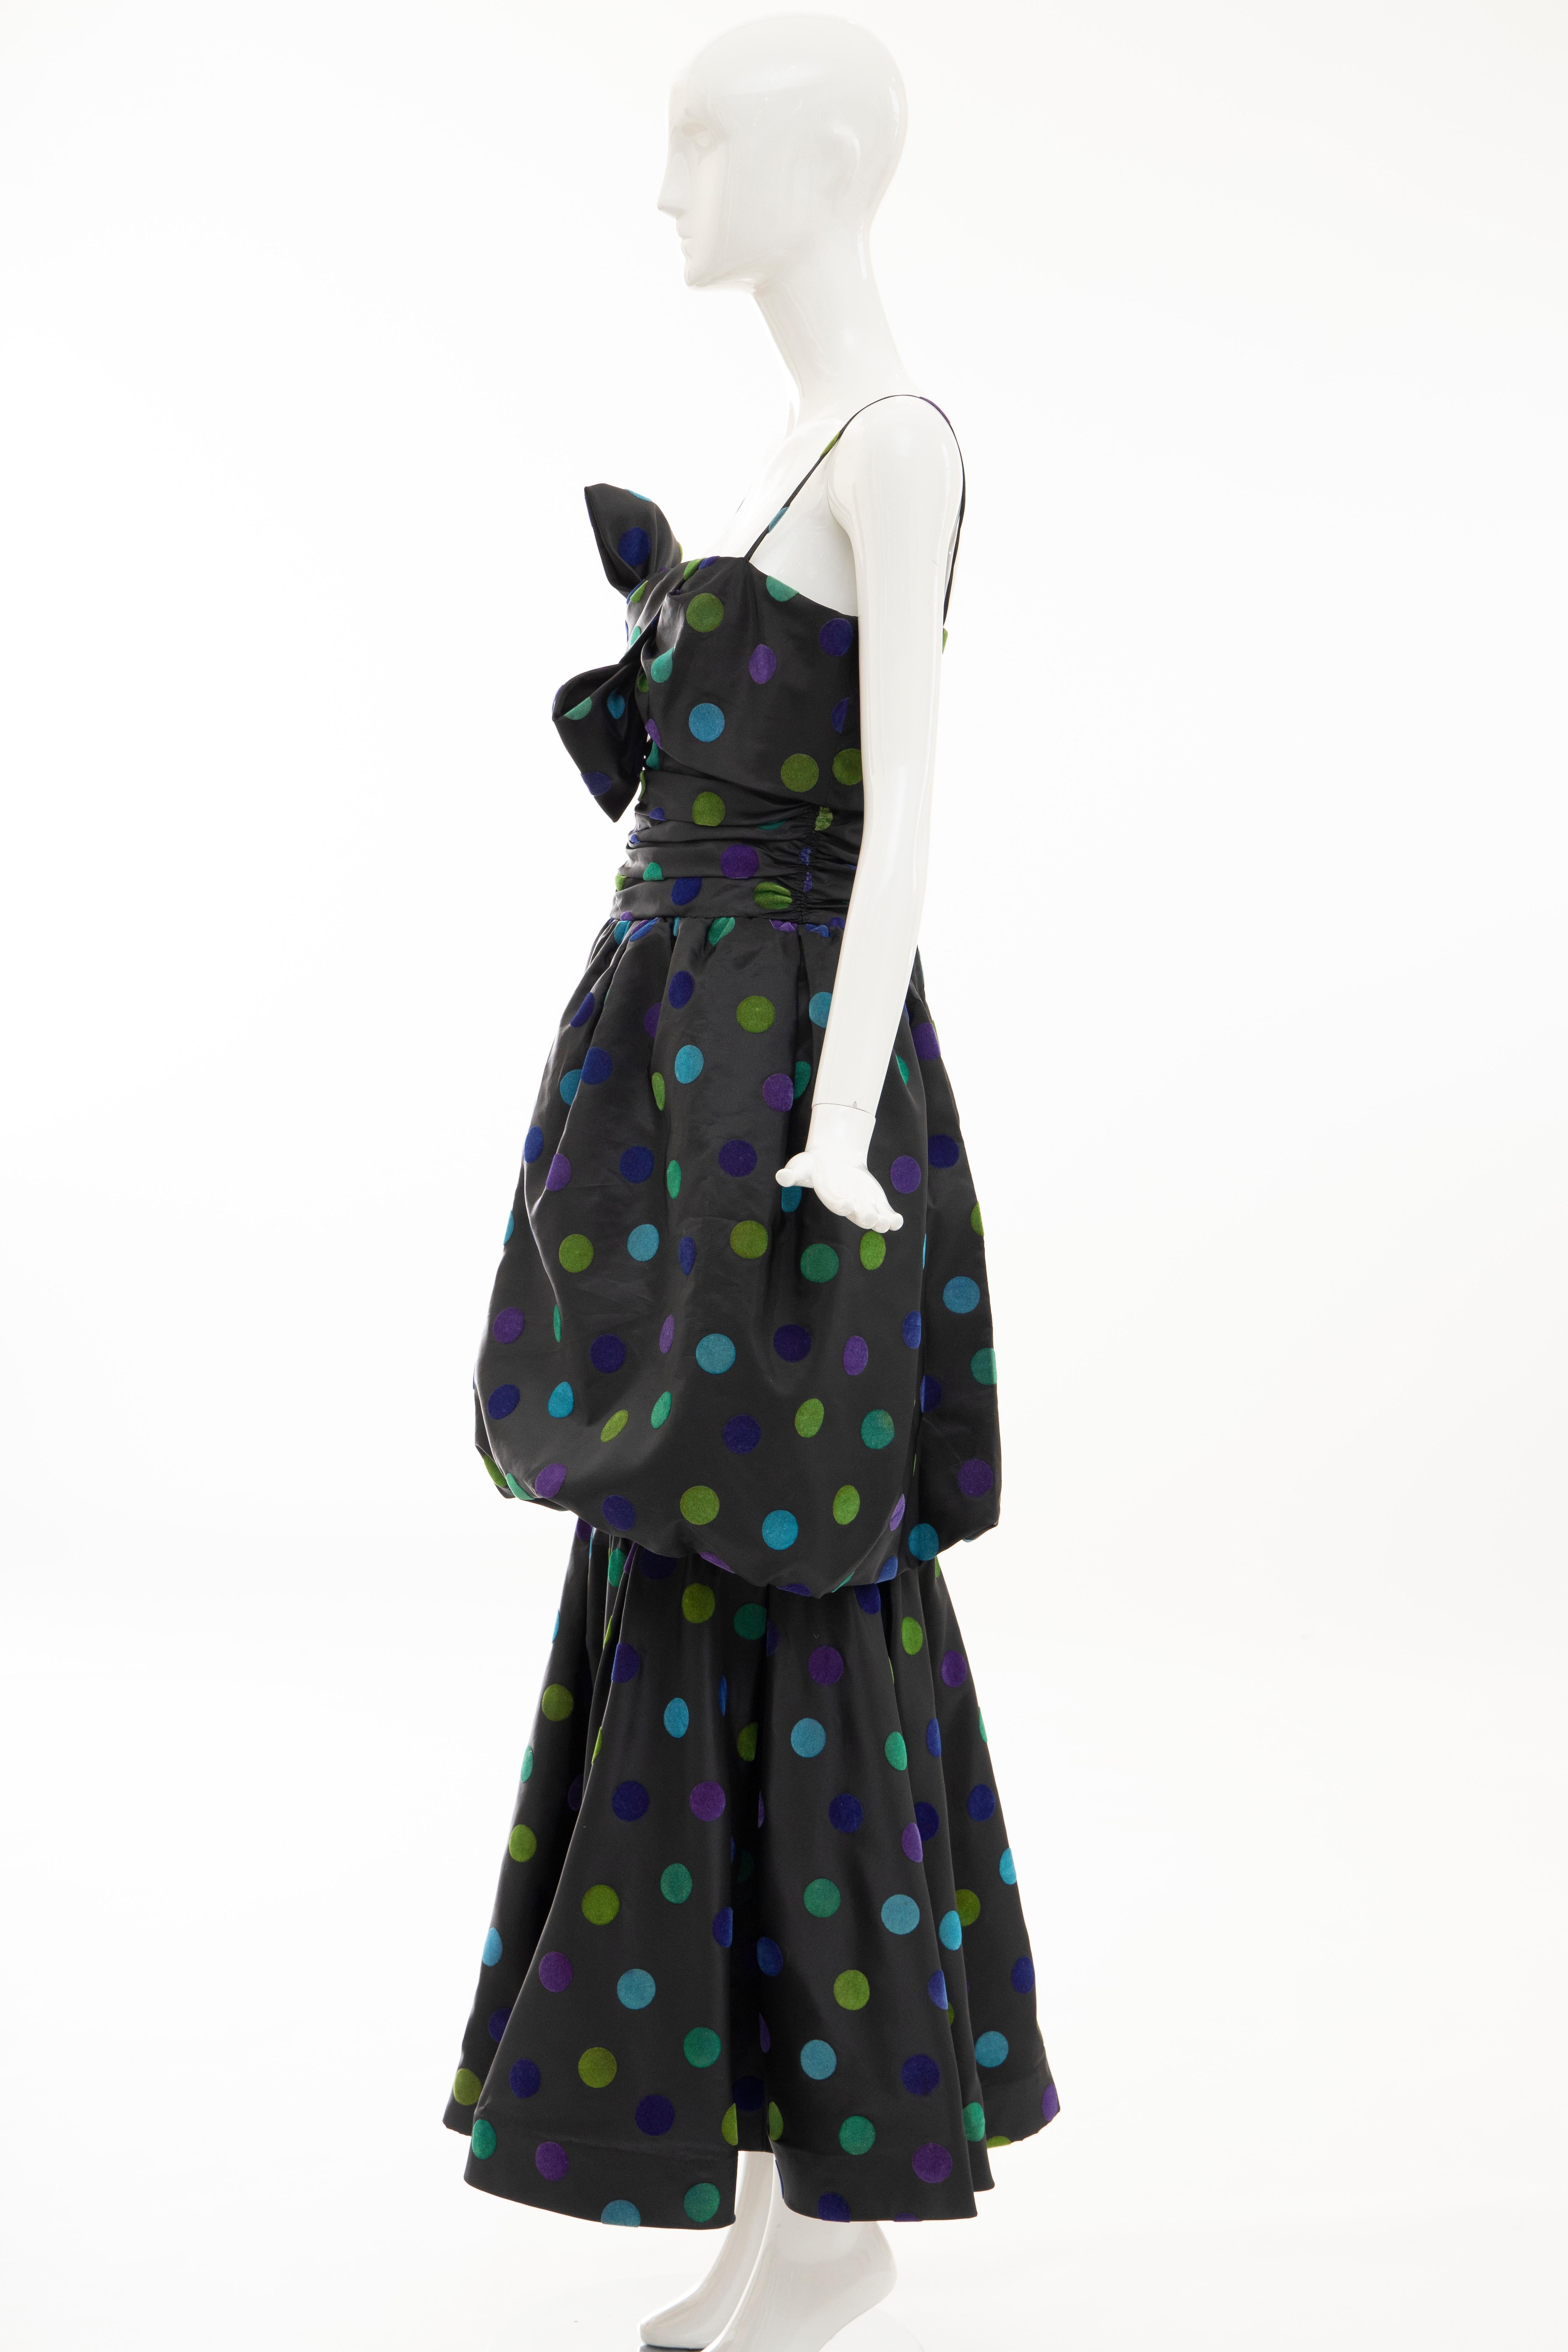 Nina Ricci Black Taffeta Velveteen Polka Dots Evening Dress, Circa: 1980s 7